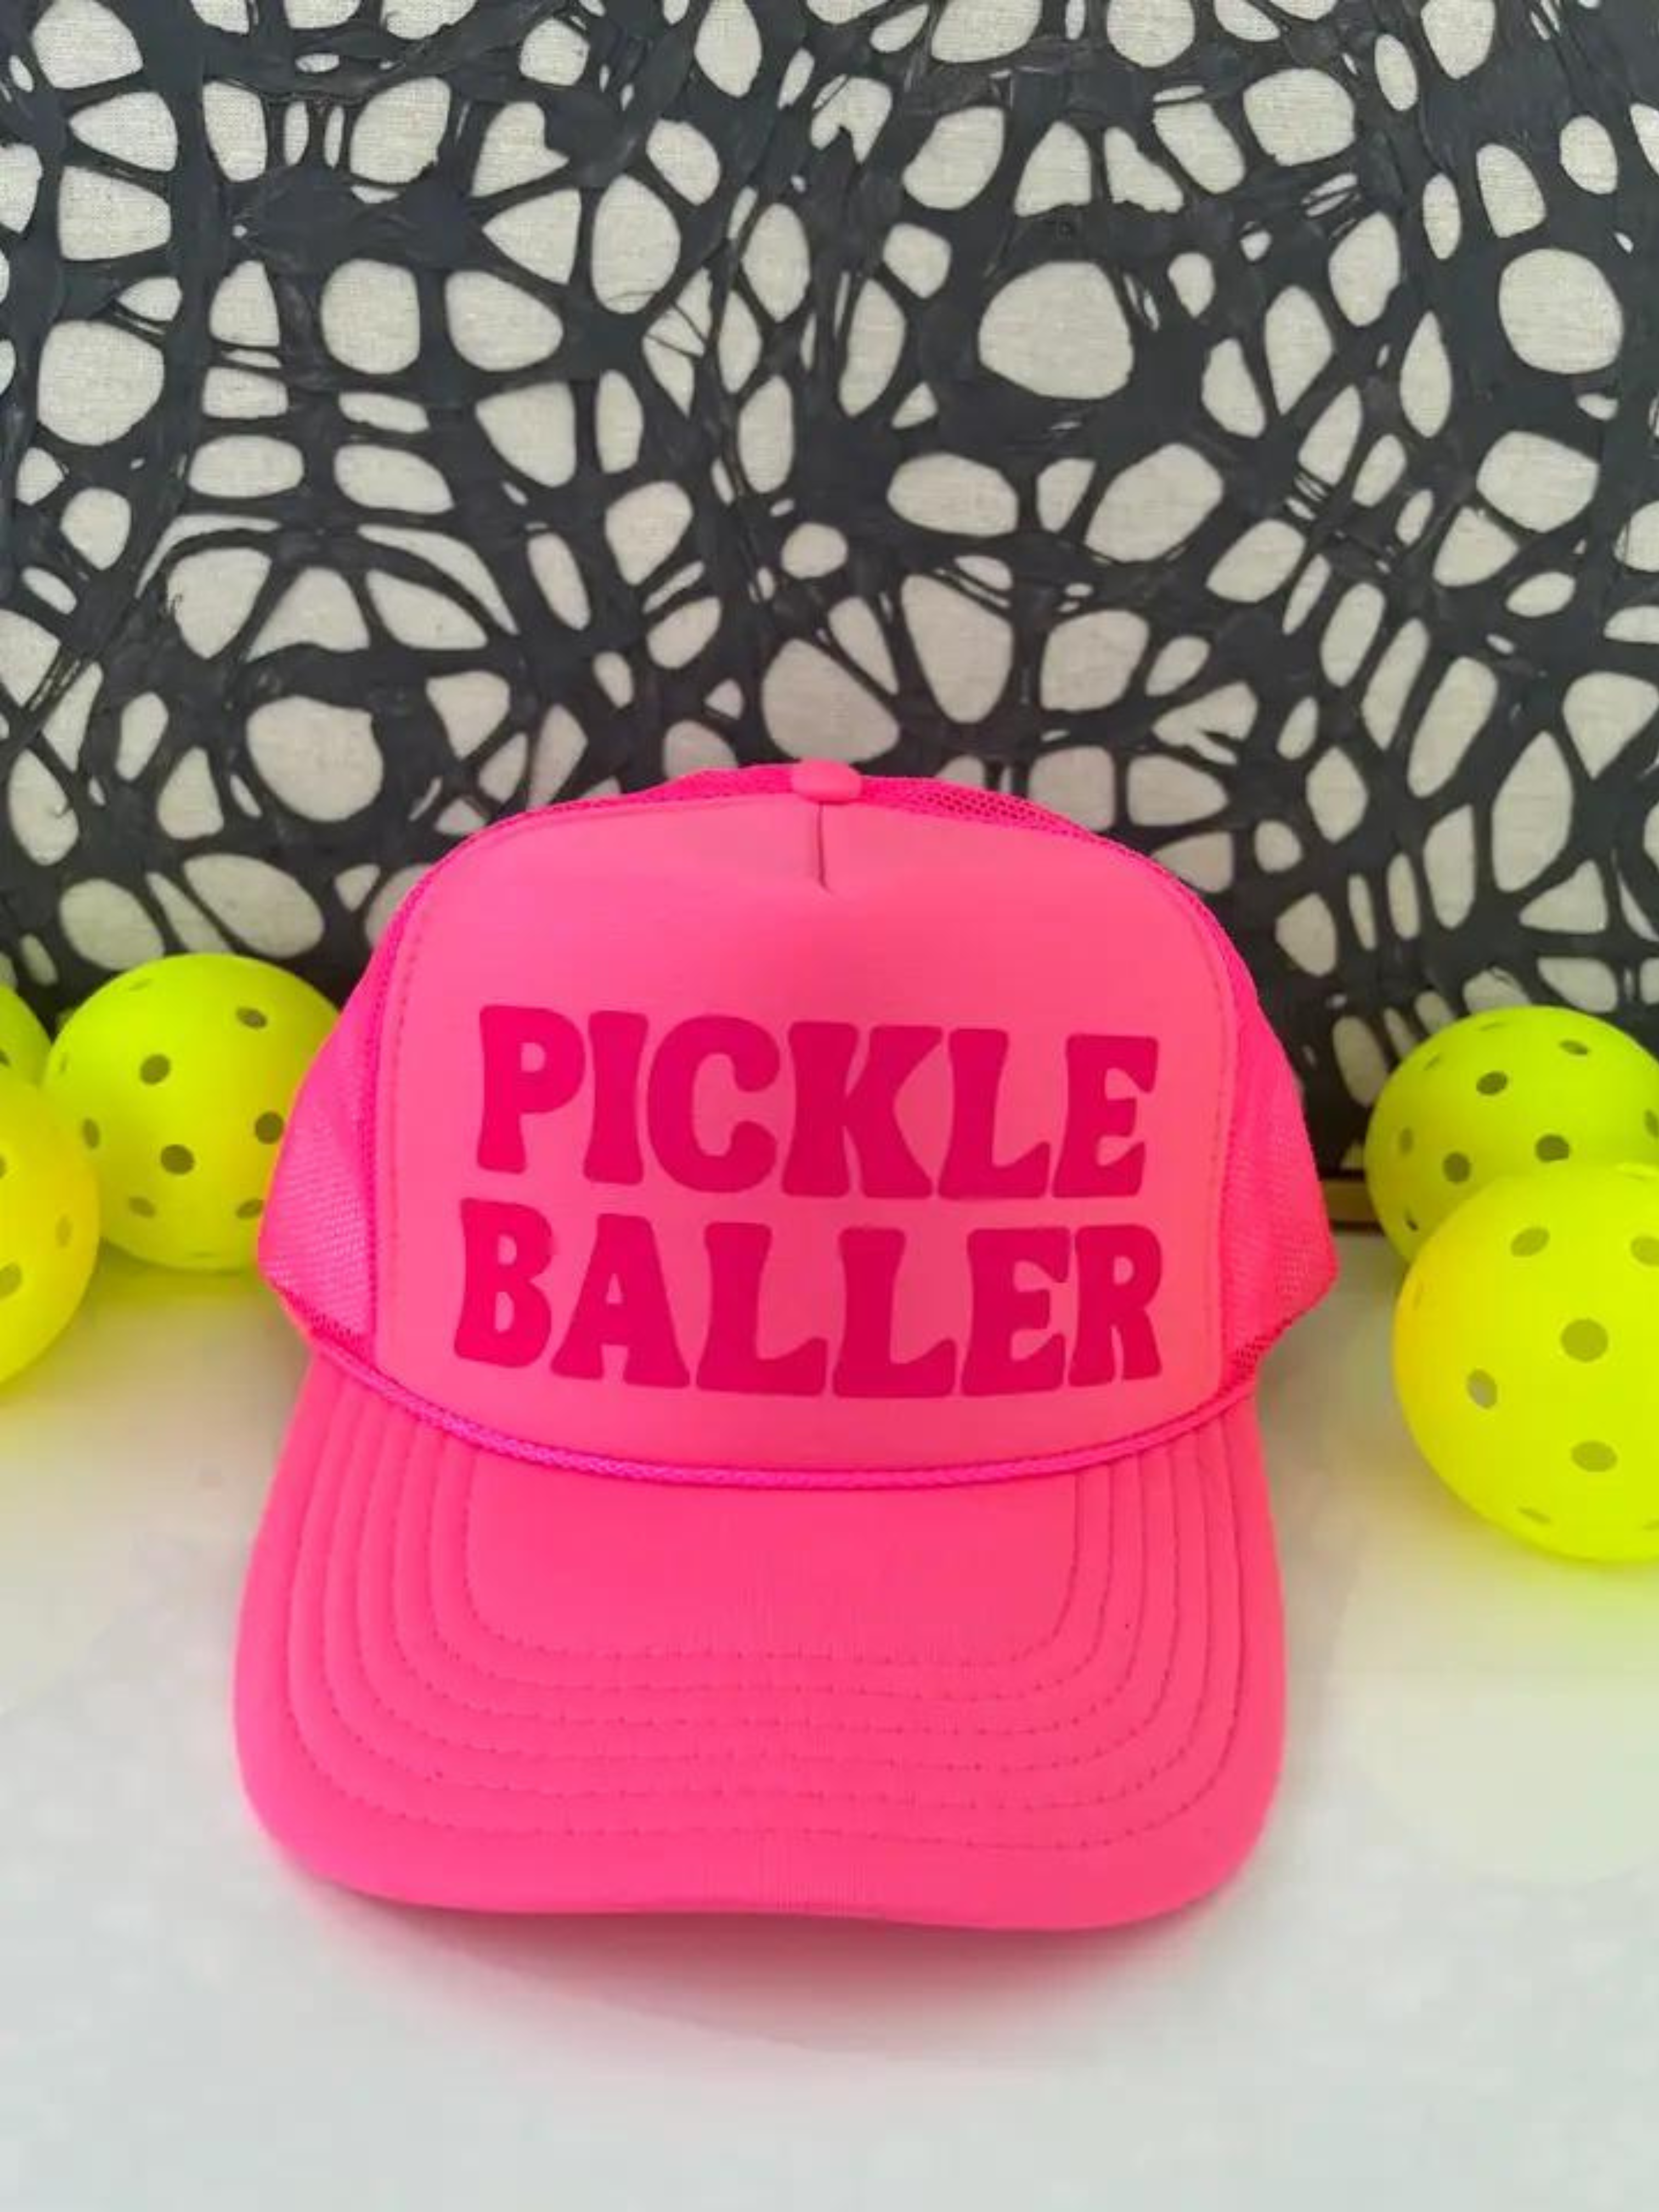 Pickle Baller Trucker Hat